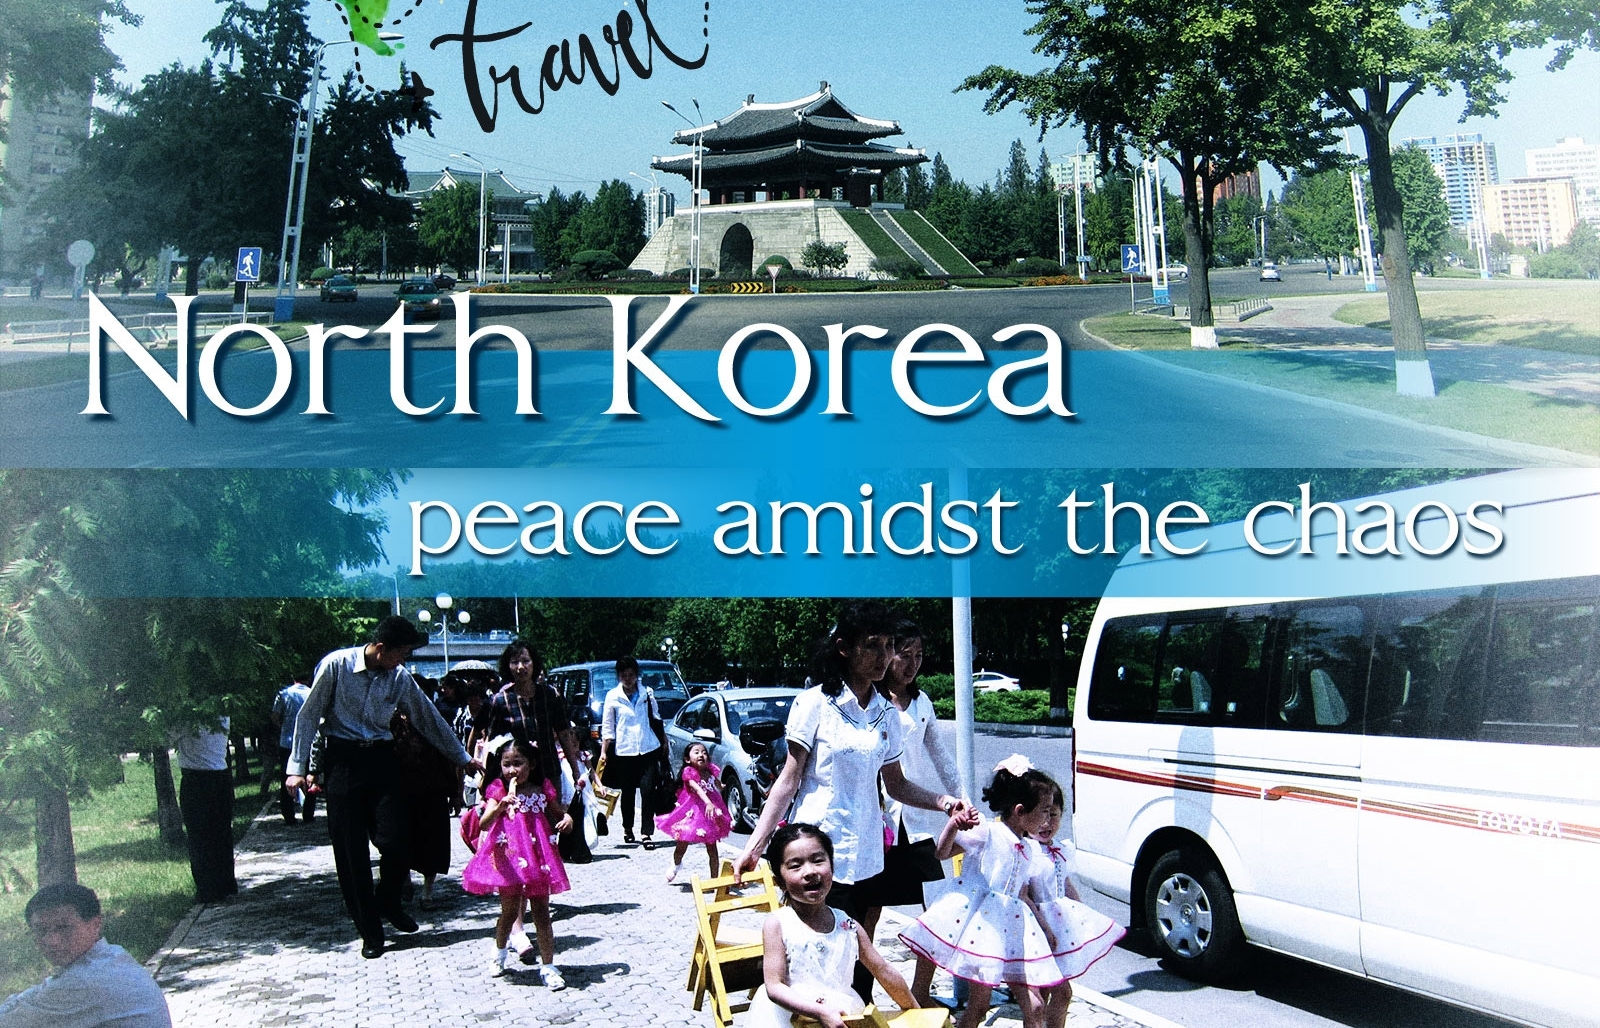 North Korea - peace amidst the chaos